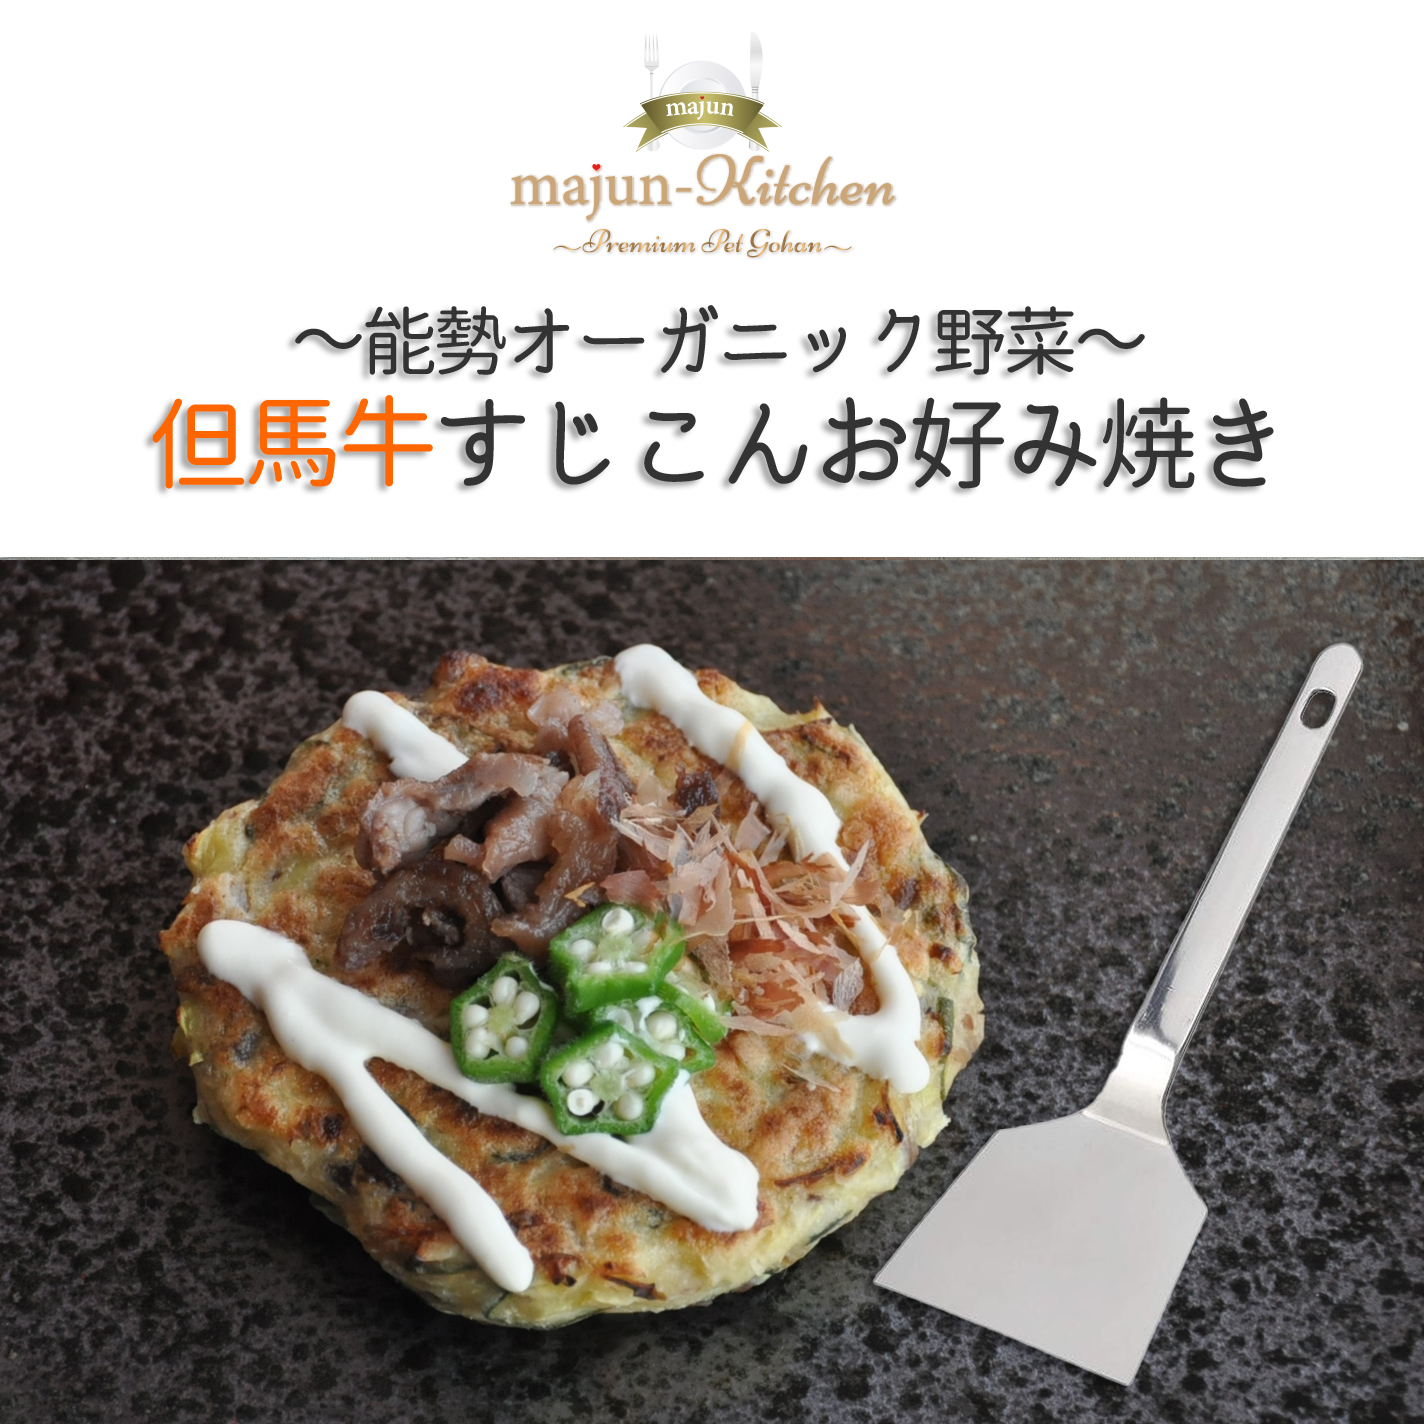 Majun Kitchen Premiumから 但馬牛すじこんお好み焼き 発売 株式会社 Majun Family コーポレートサイト